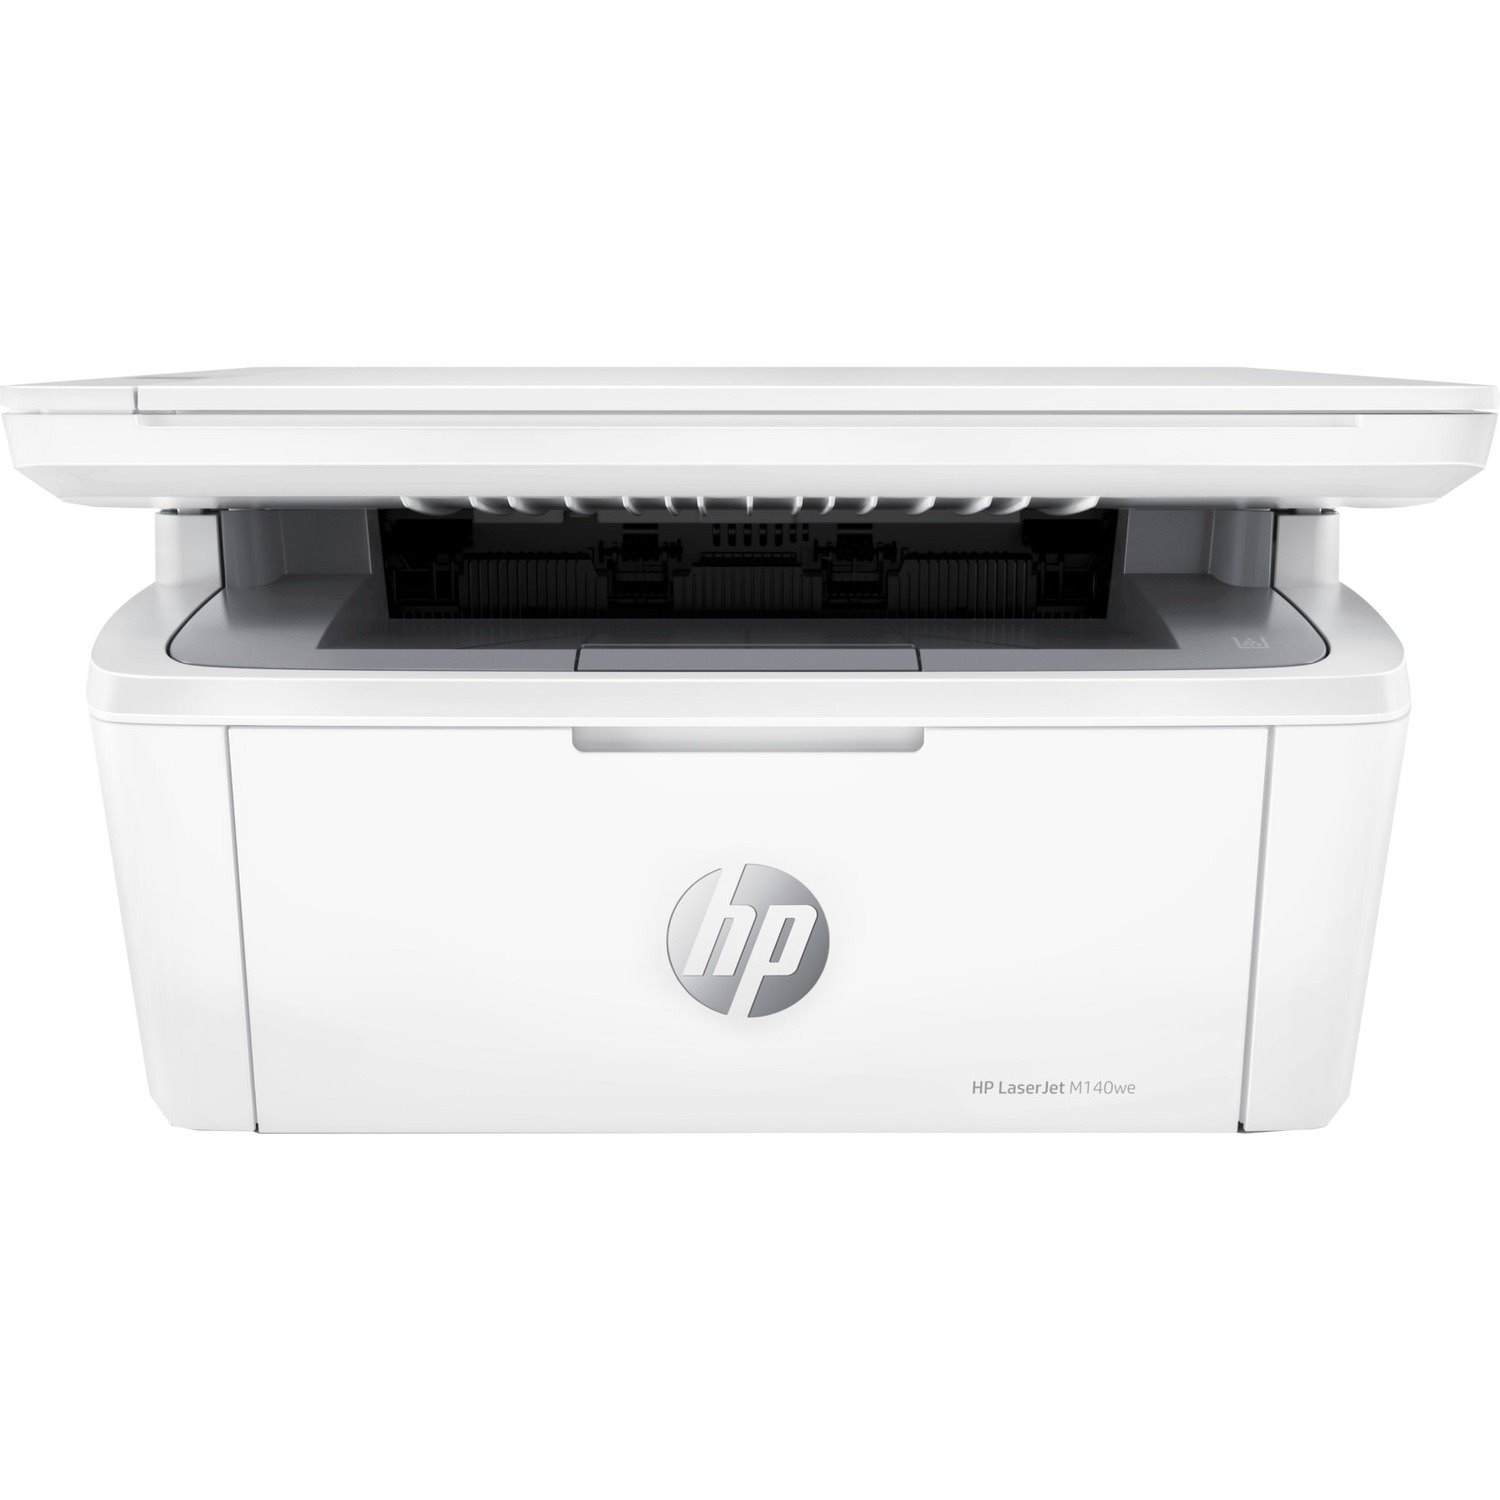 HP LaserJet M140we Wireless Laser Multifunction Printer - Monochrome